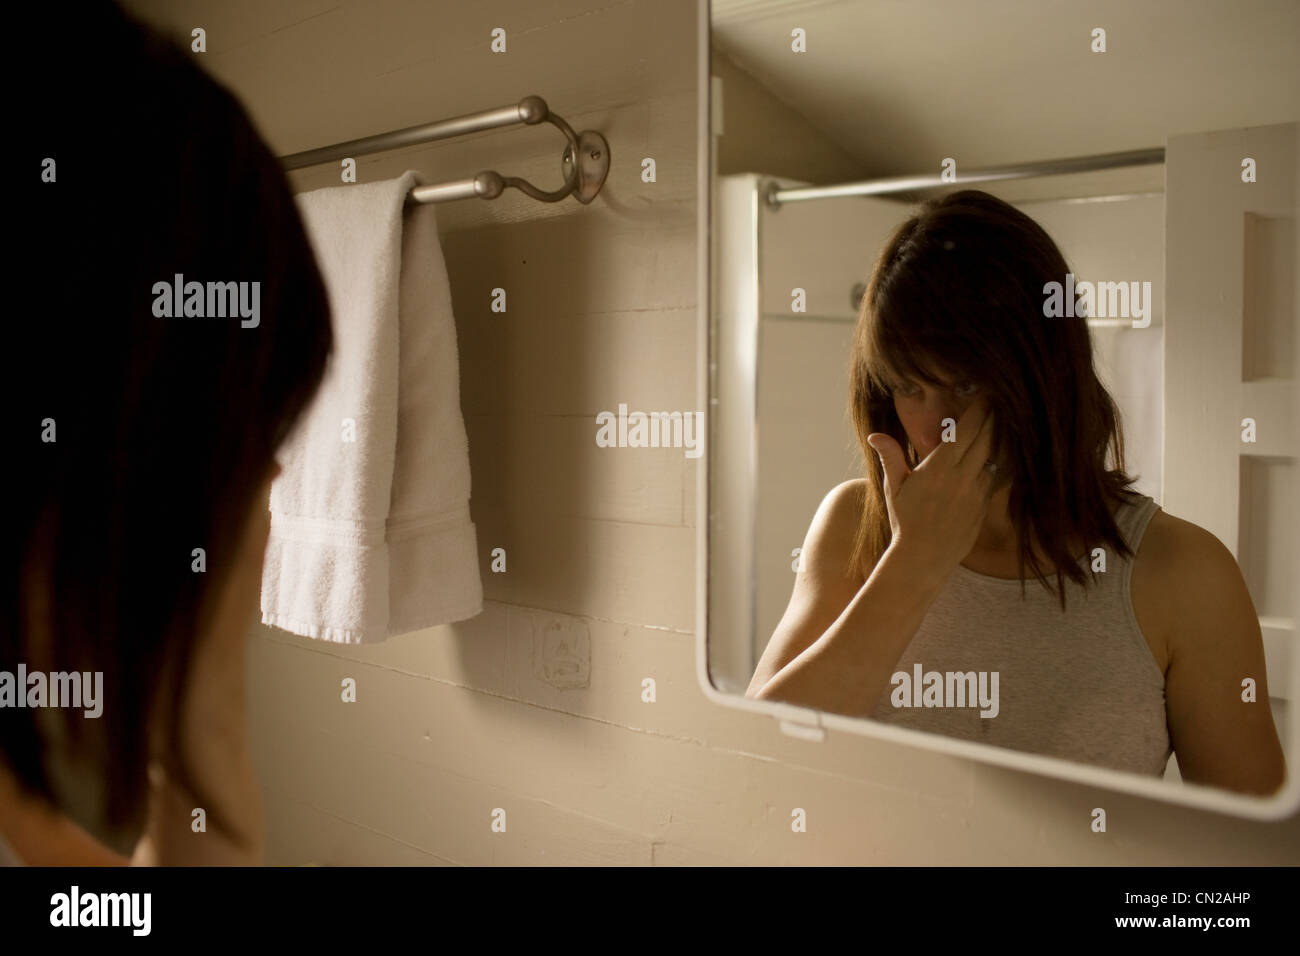 Woman looking in bathroom mirror Stock Photo